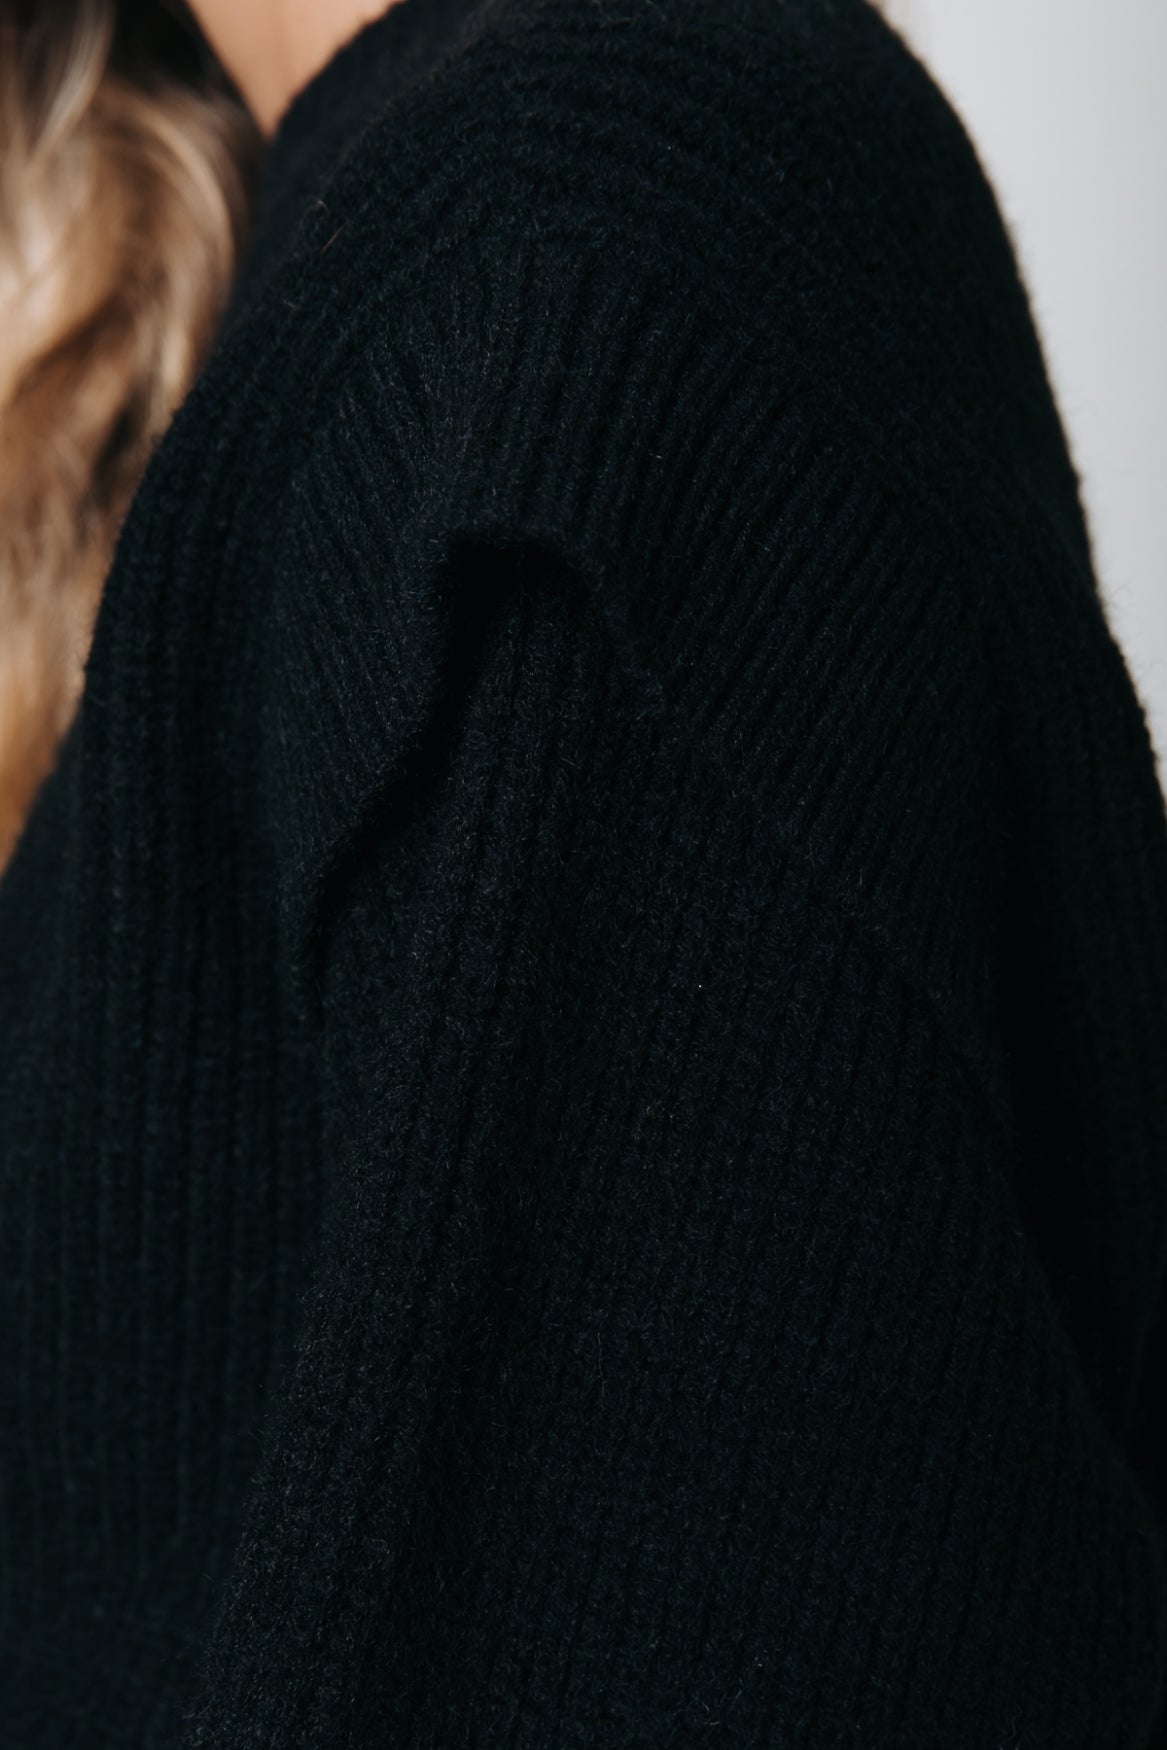 Colourful Rebel Toby Sleeve Detail Knitwear Sweater | Black 